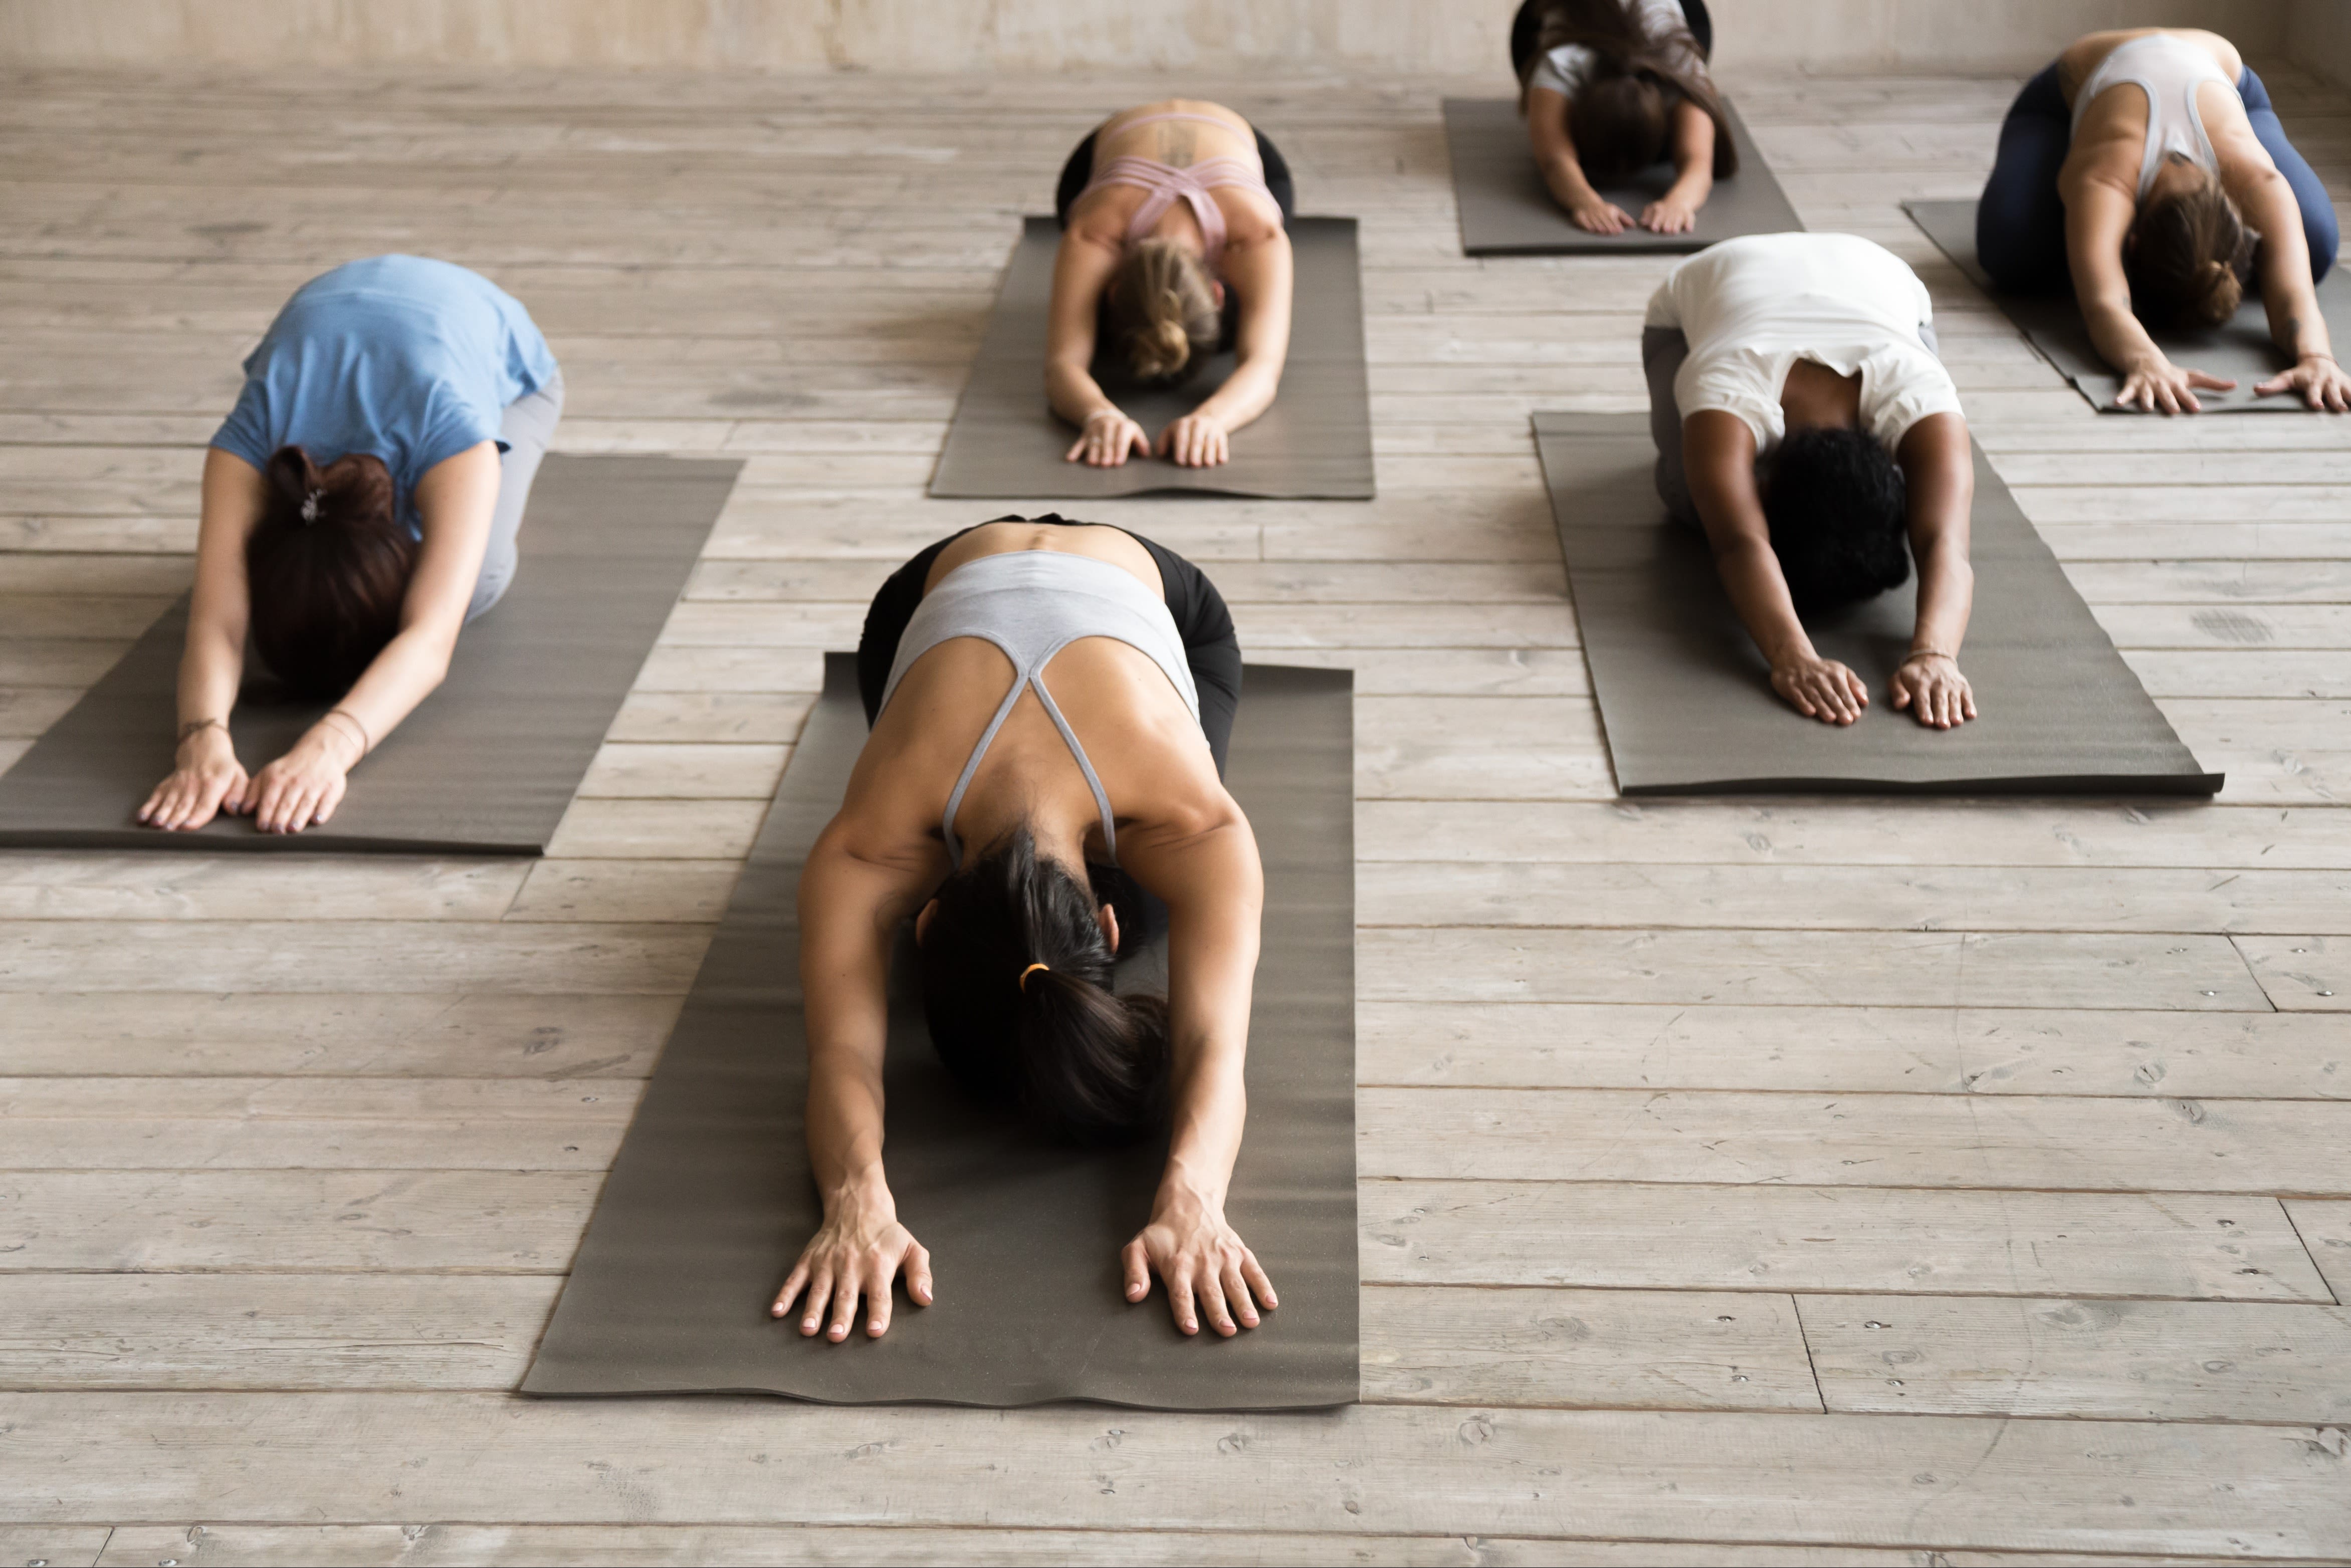 Prana Yoga: Read Reviews and Book Classes on ClassPass